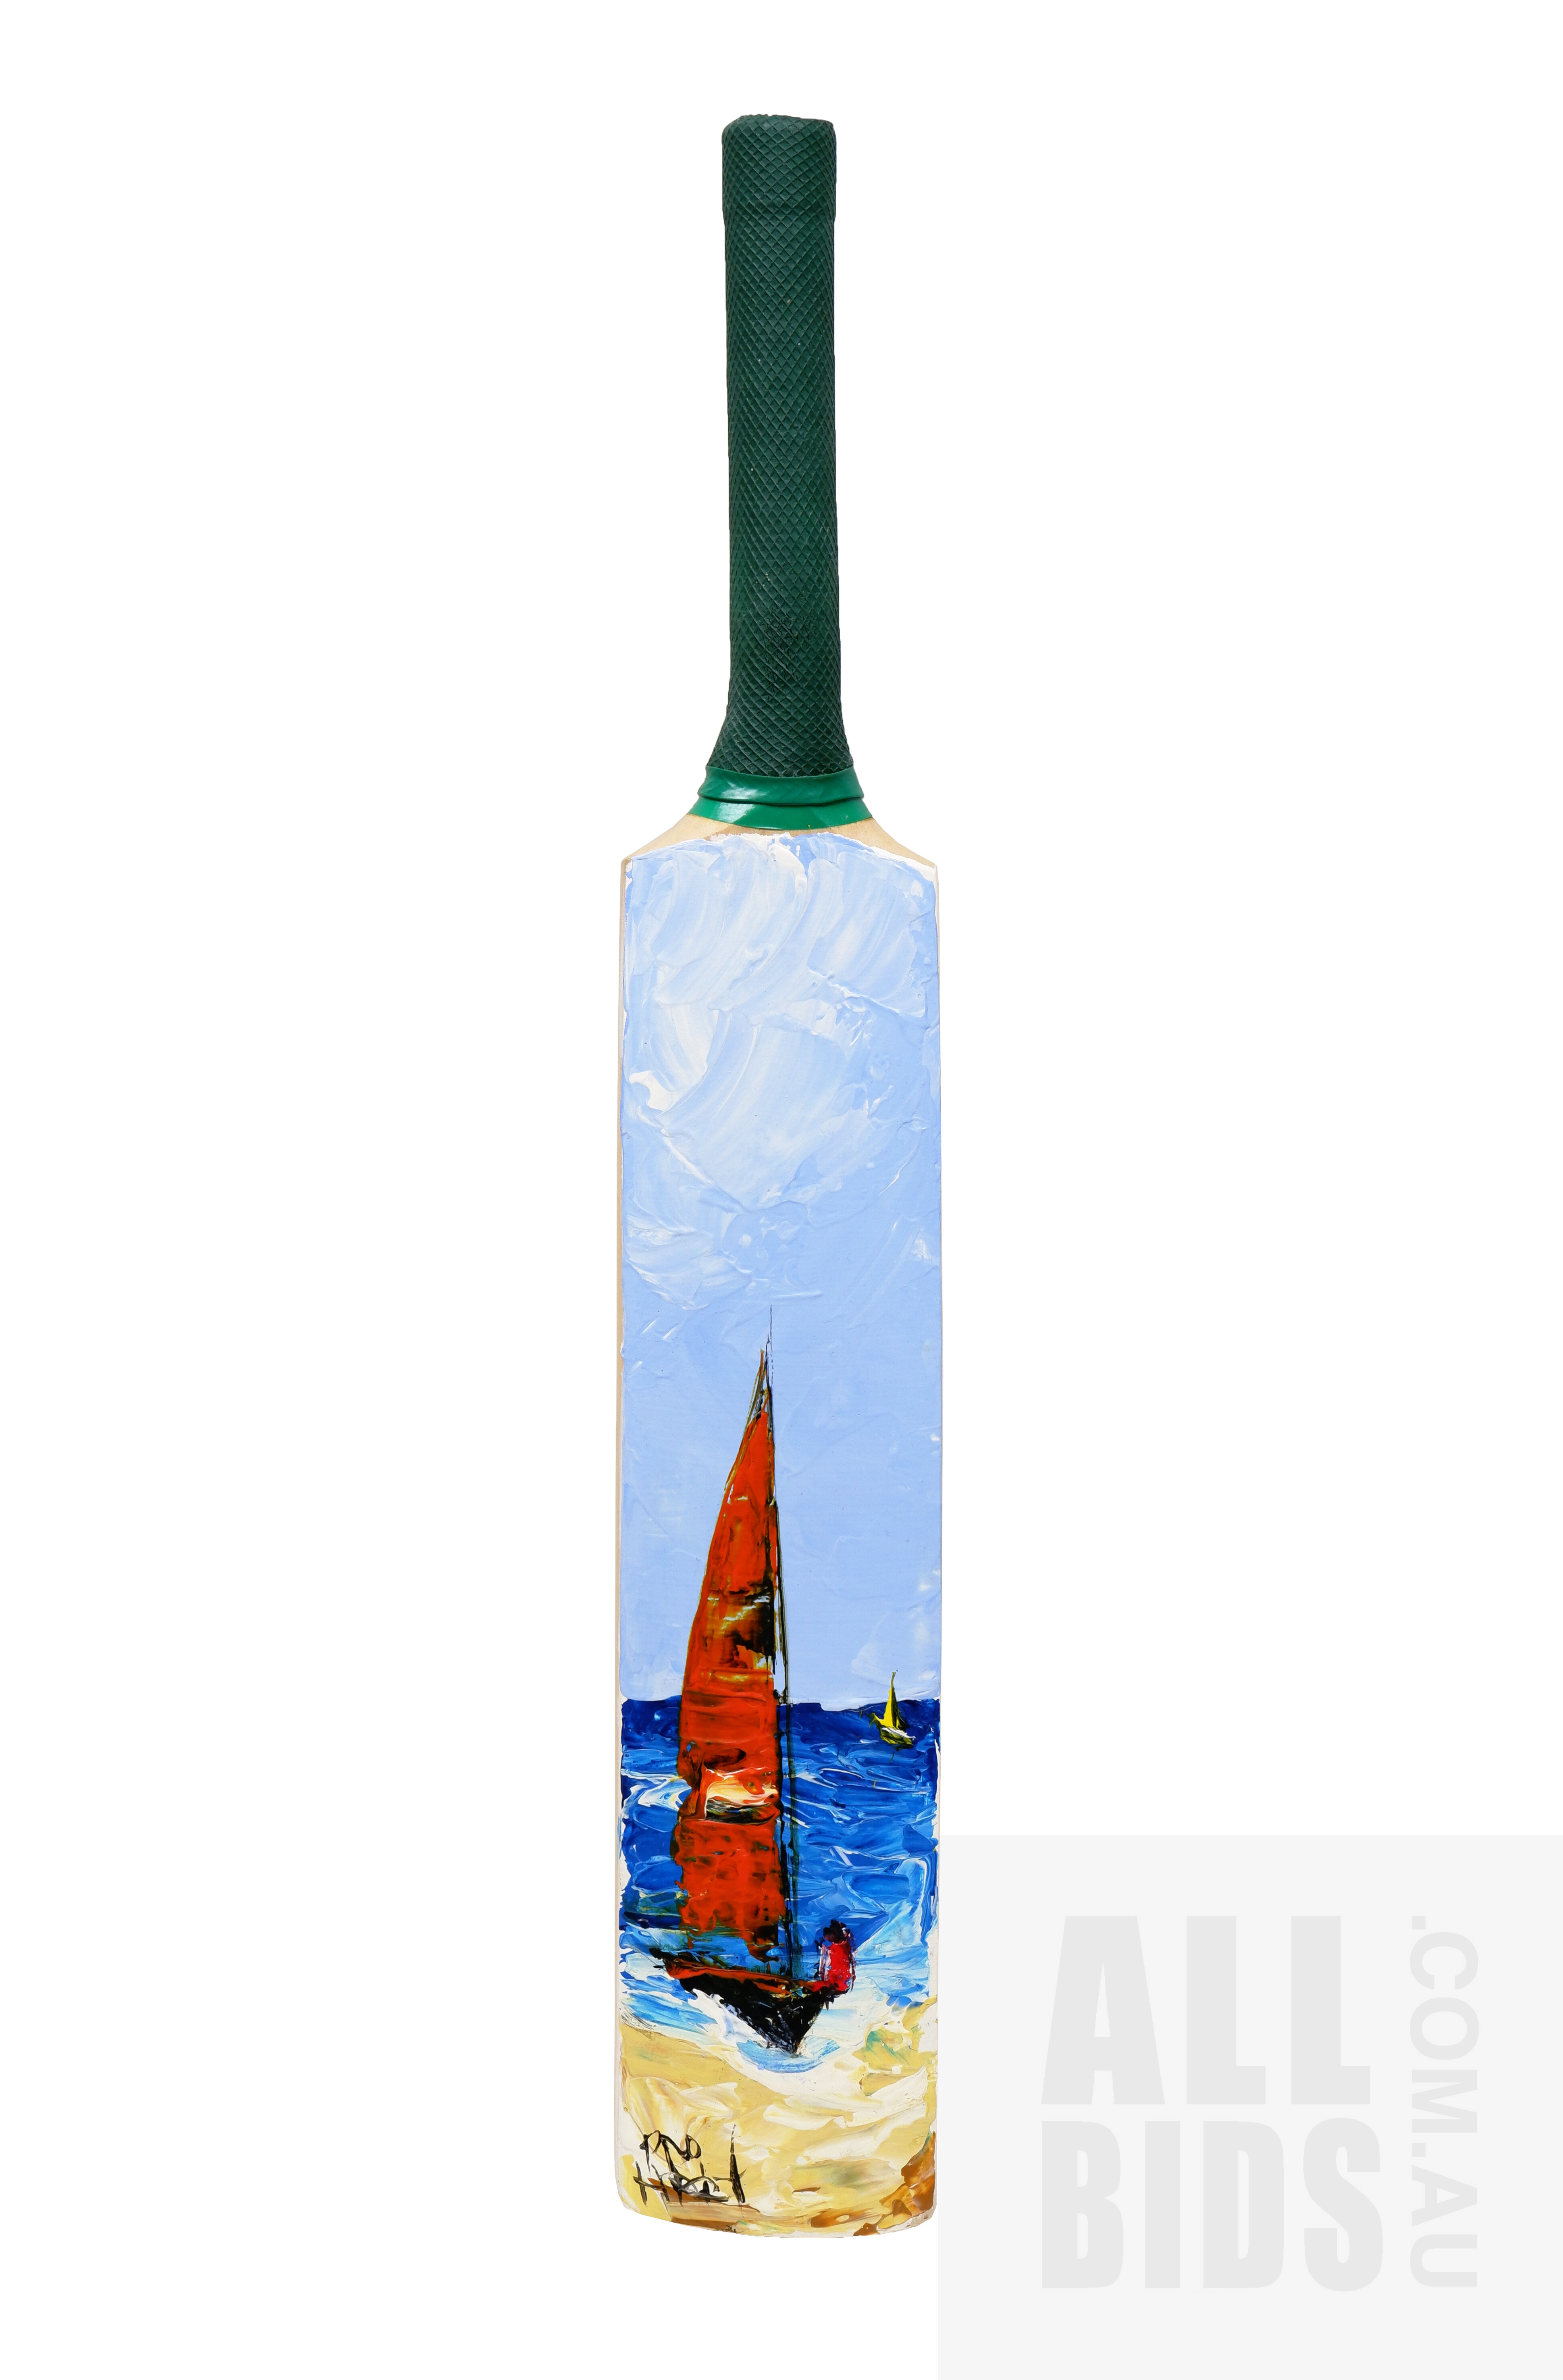 'Pro Hart (1928-2006), Beach Scene with Boat, Oil on Cricket Bat, 40 cm overall'